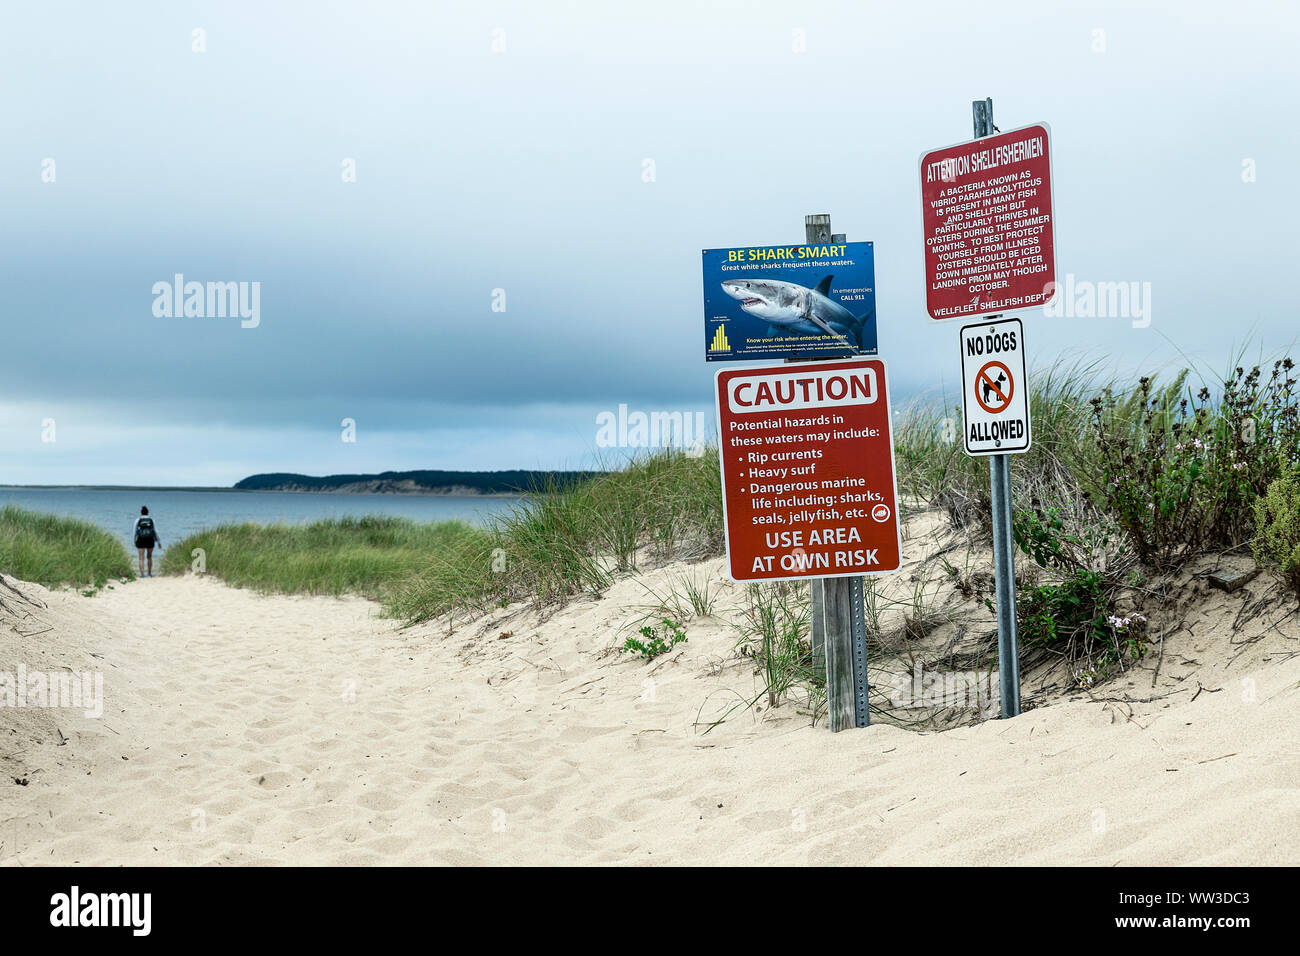 Shark warning and beach advisory, Wellfleet, Cape Cod, Massachusetts, USA. Stock Photo